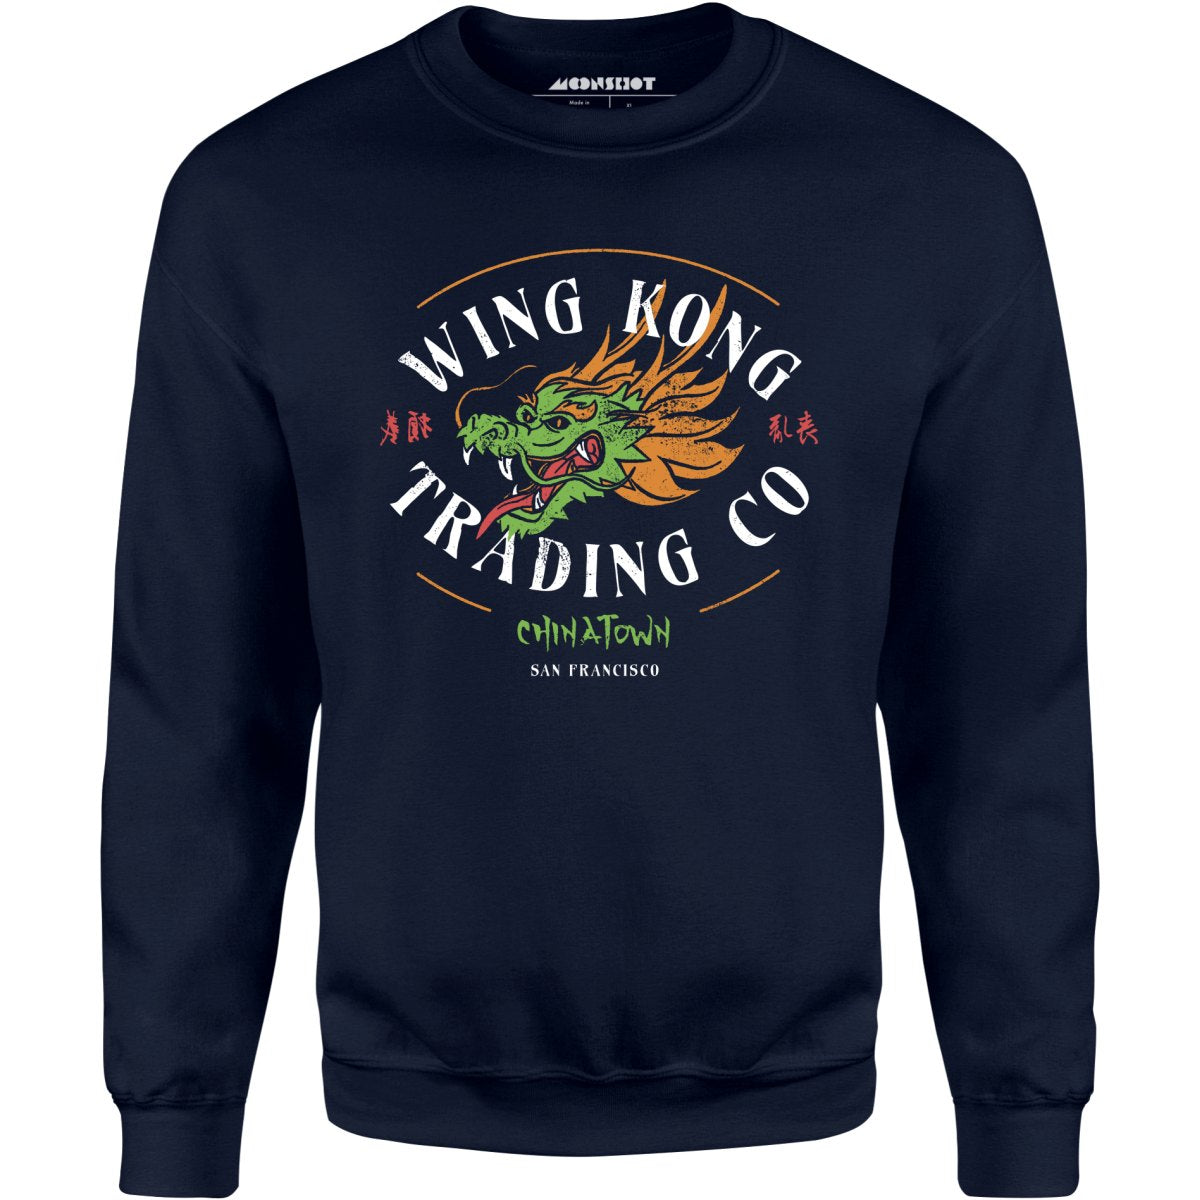 Wing Kong Trading Co. - Unisex Sweatshirt